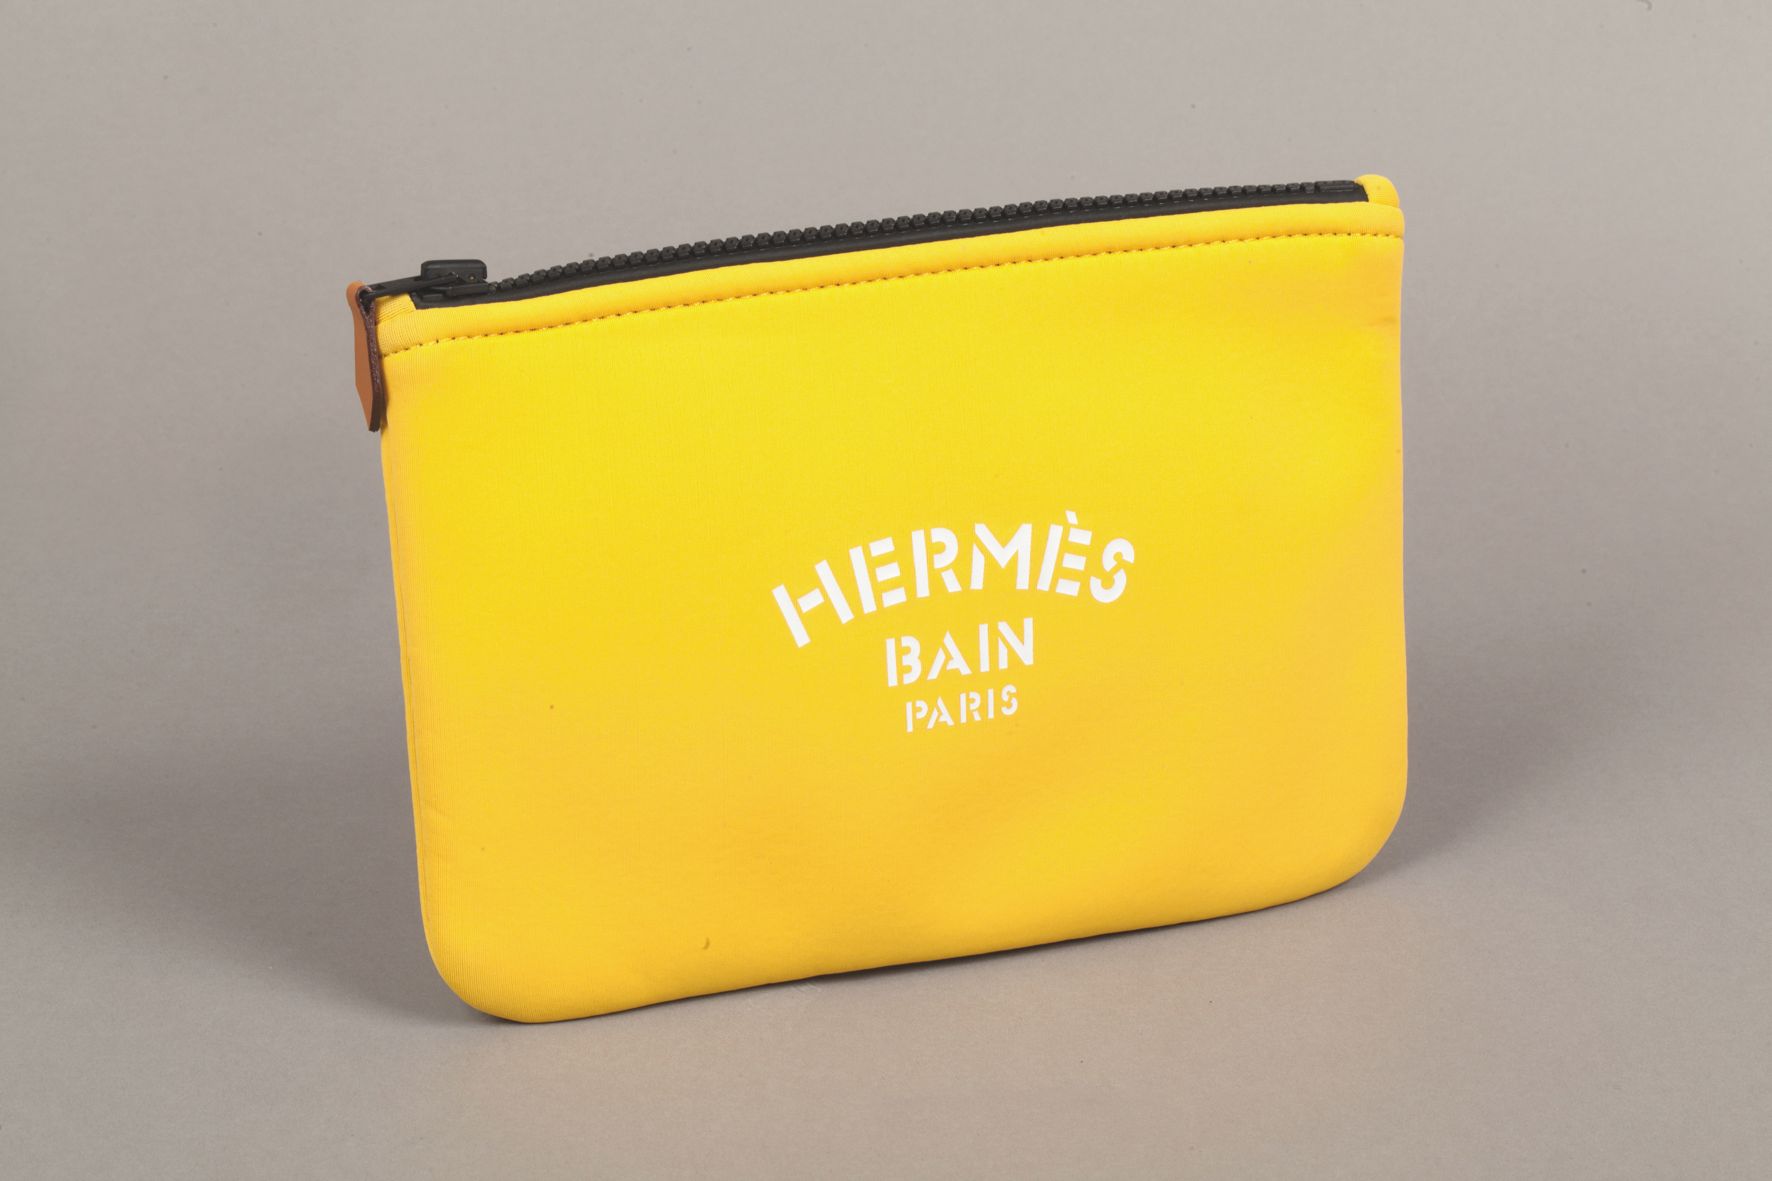 Null *HERMES Paris Bain - "Neobain" bag PM 21cm in yellow neoprene, zip closure.&hellip;